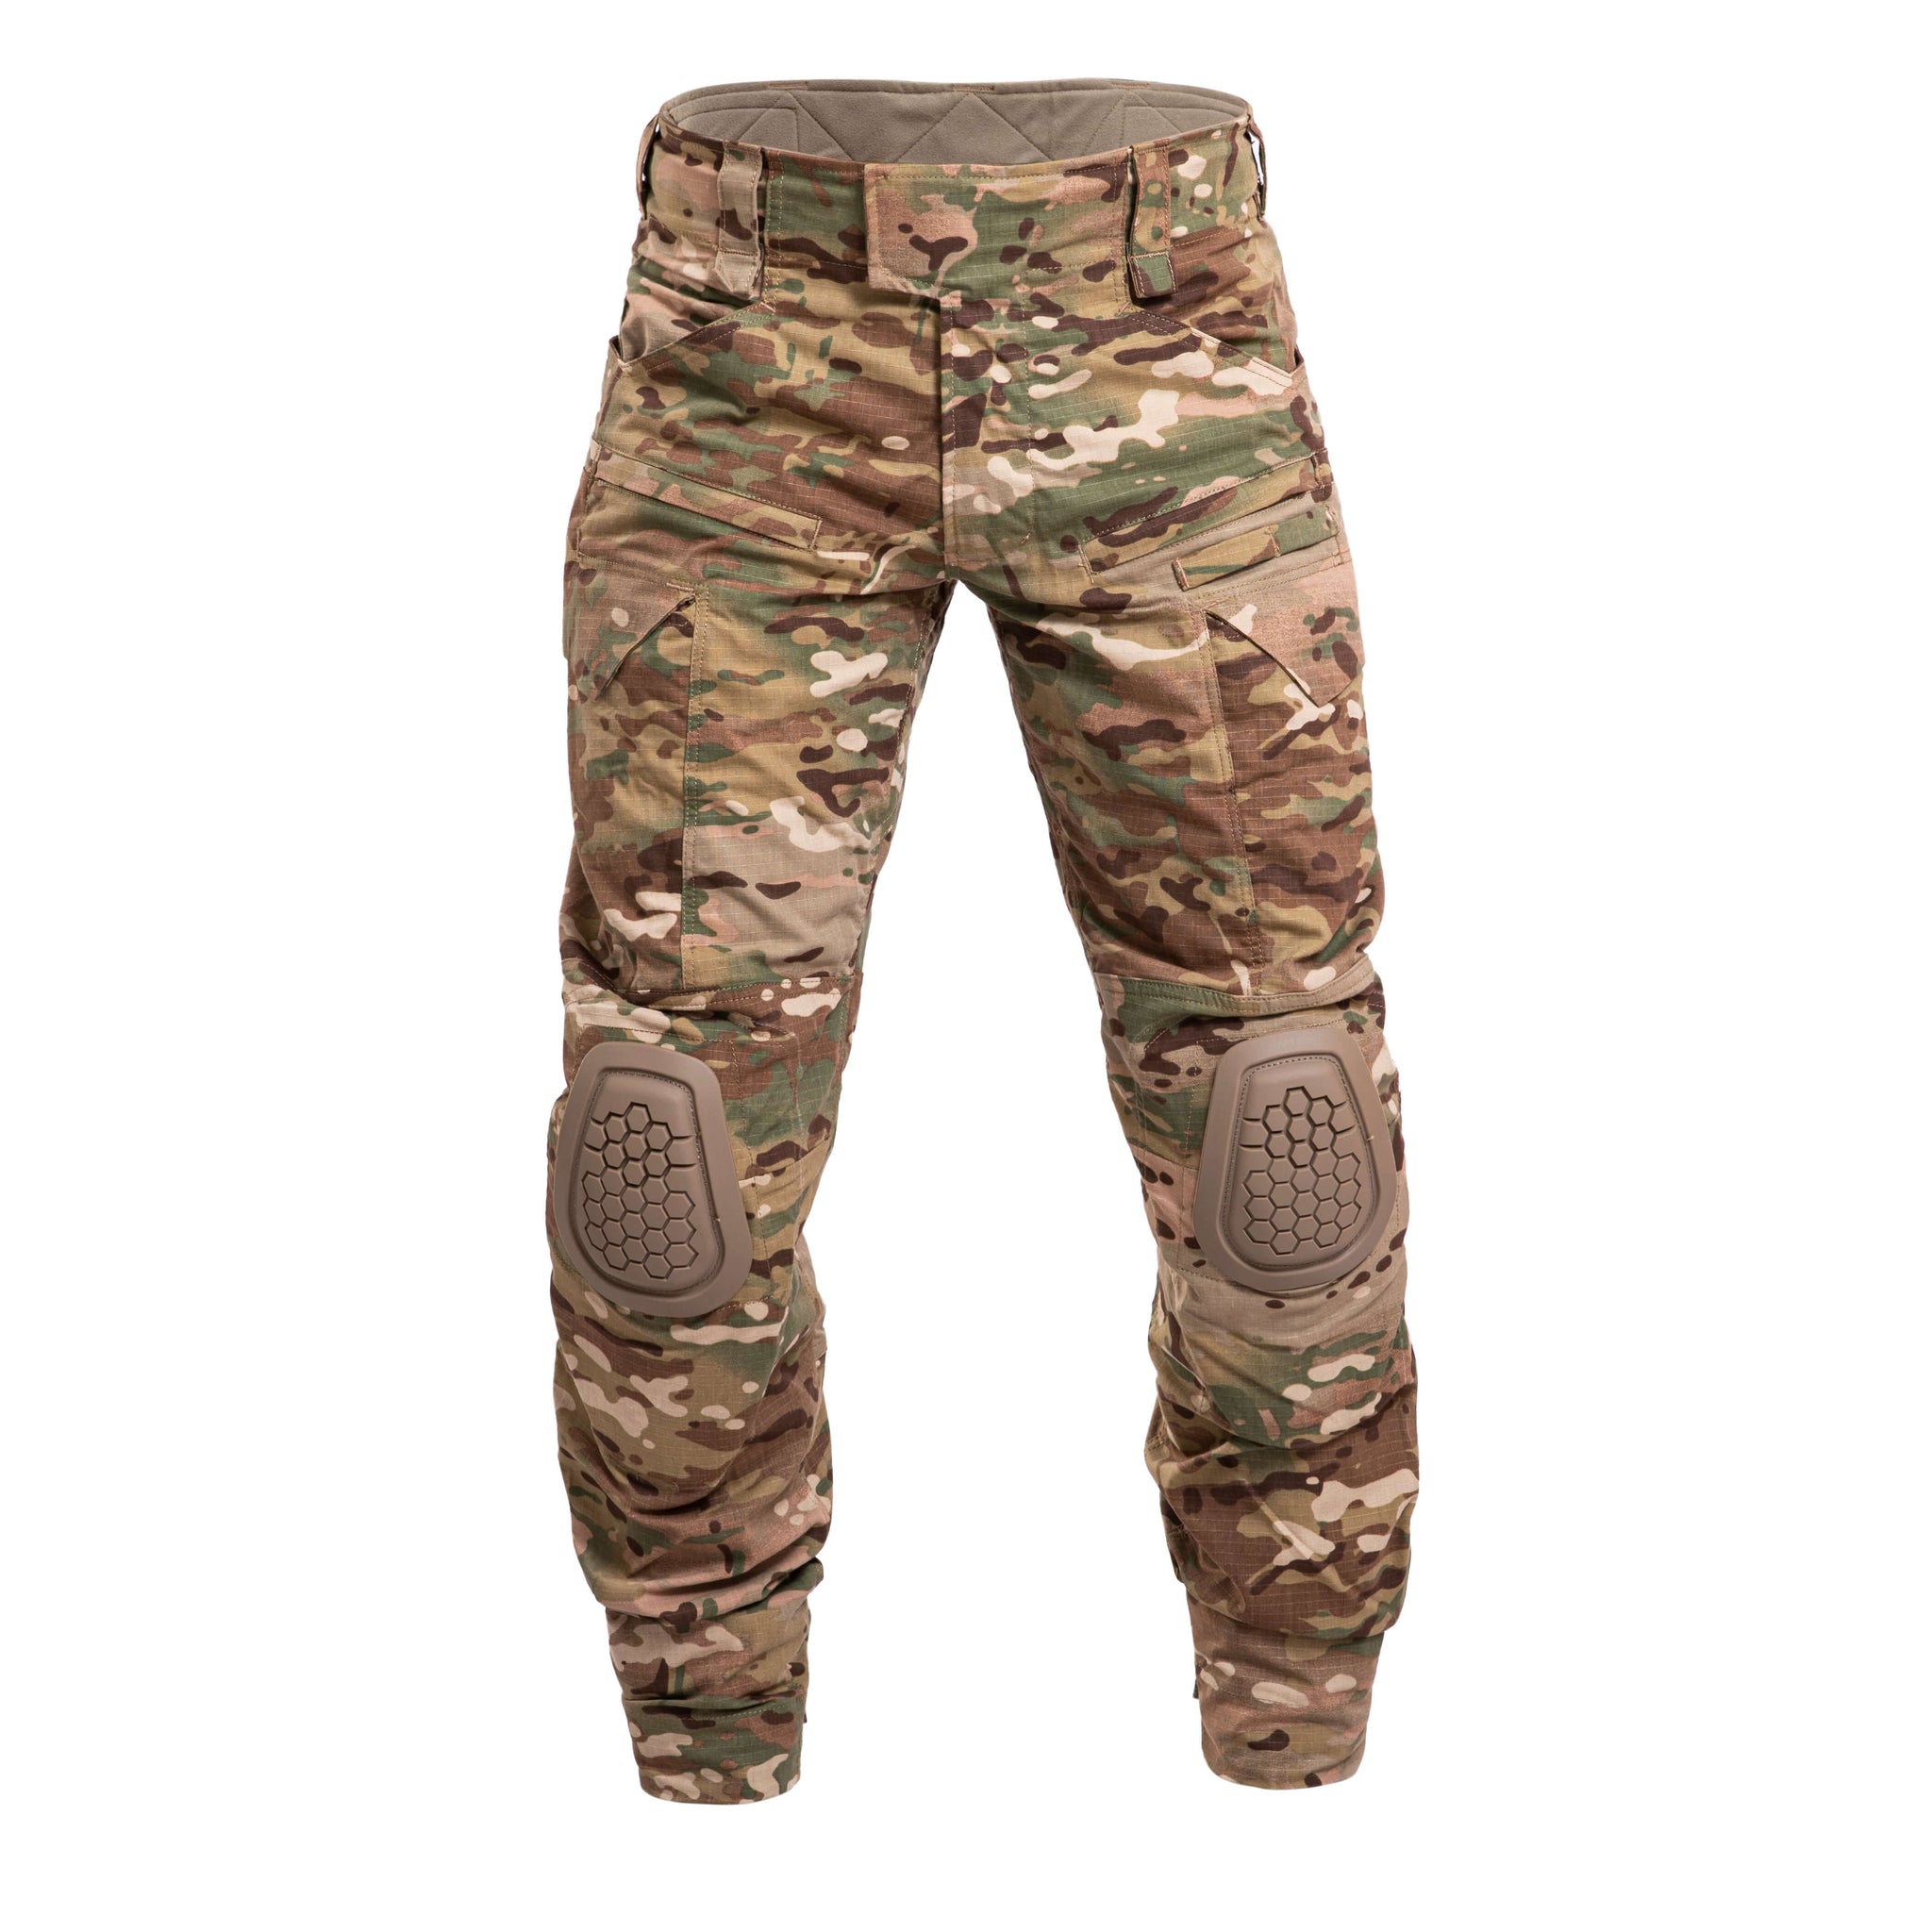 Tactical Desert Camouflage G4 Combat Uniform